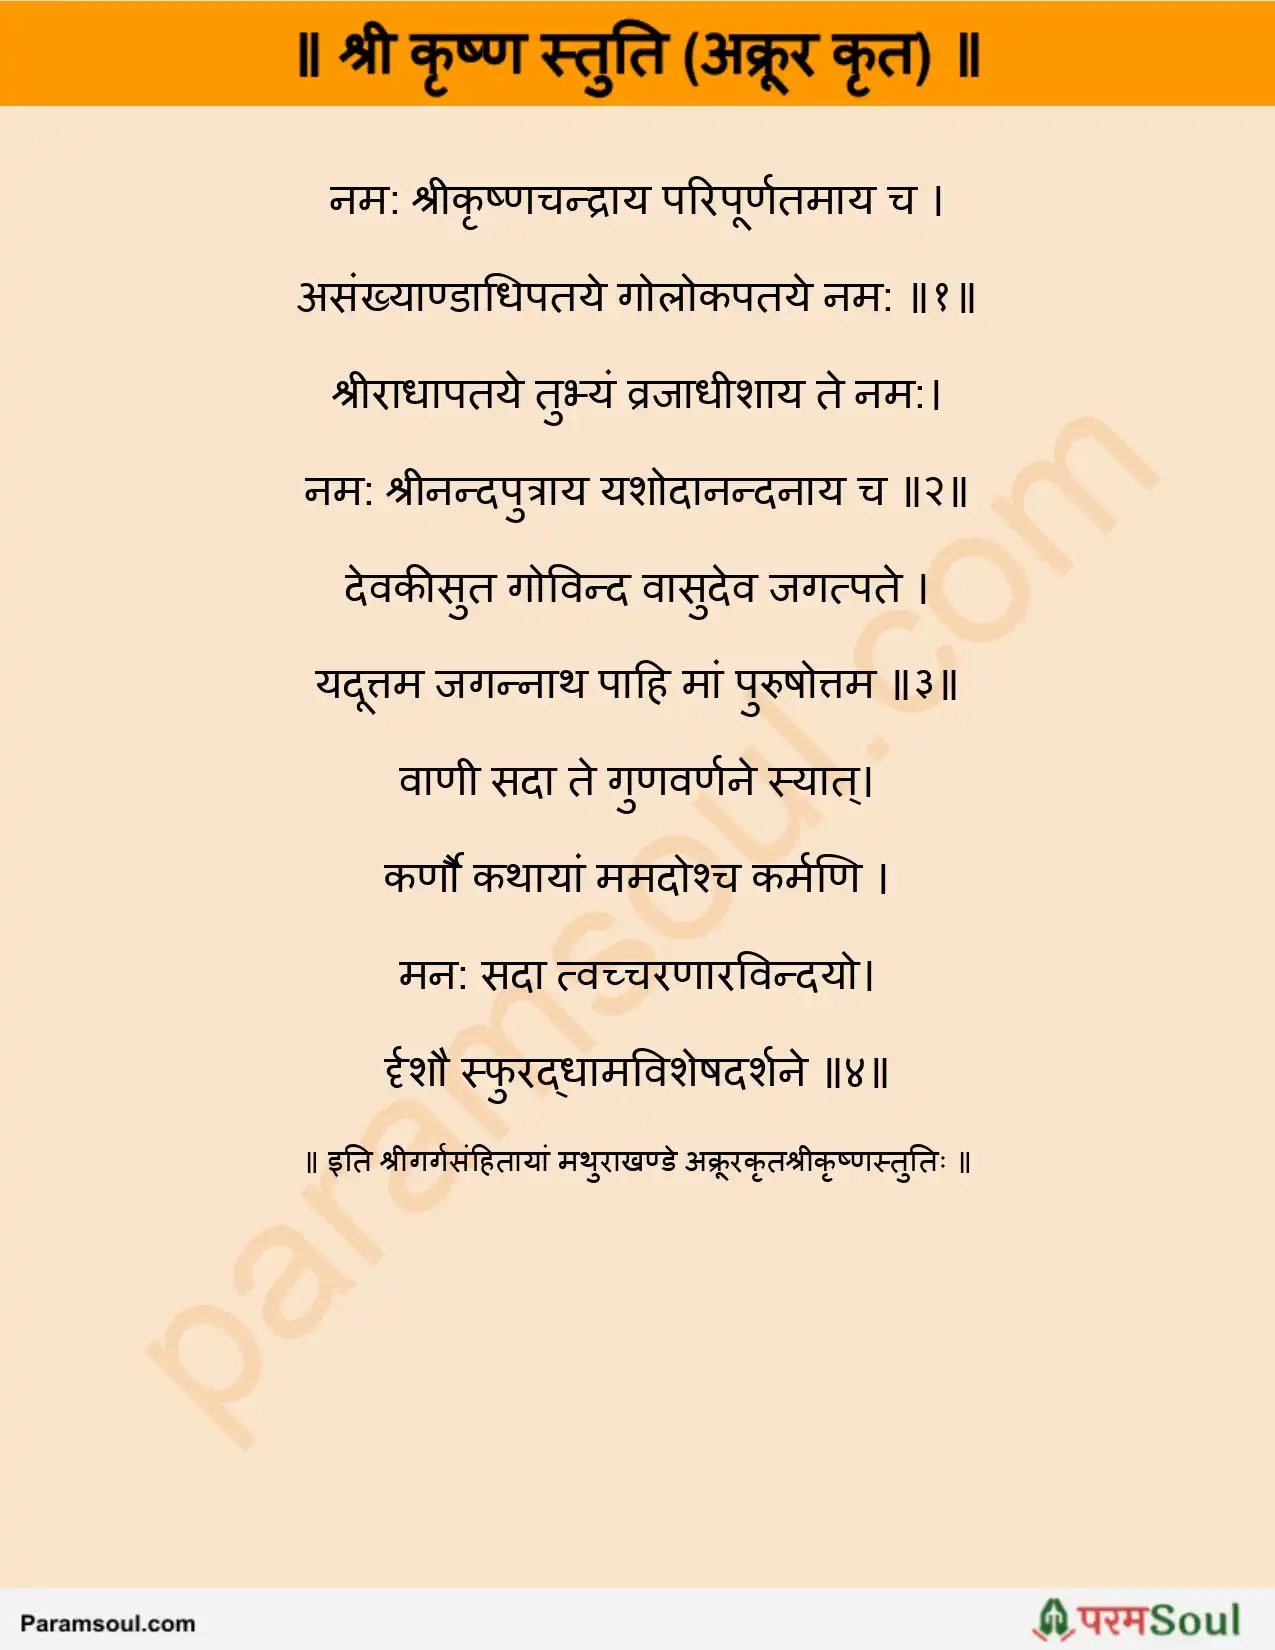 Sri Krishna Stuti Lyrics - श्री कृष्ण स्तुति